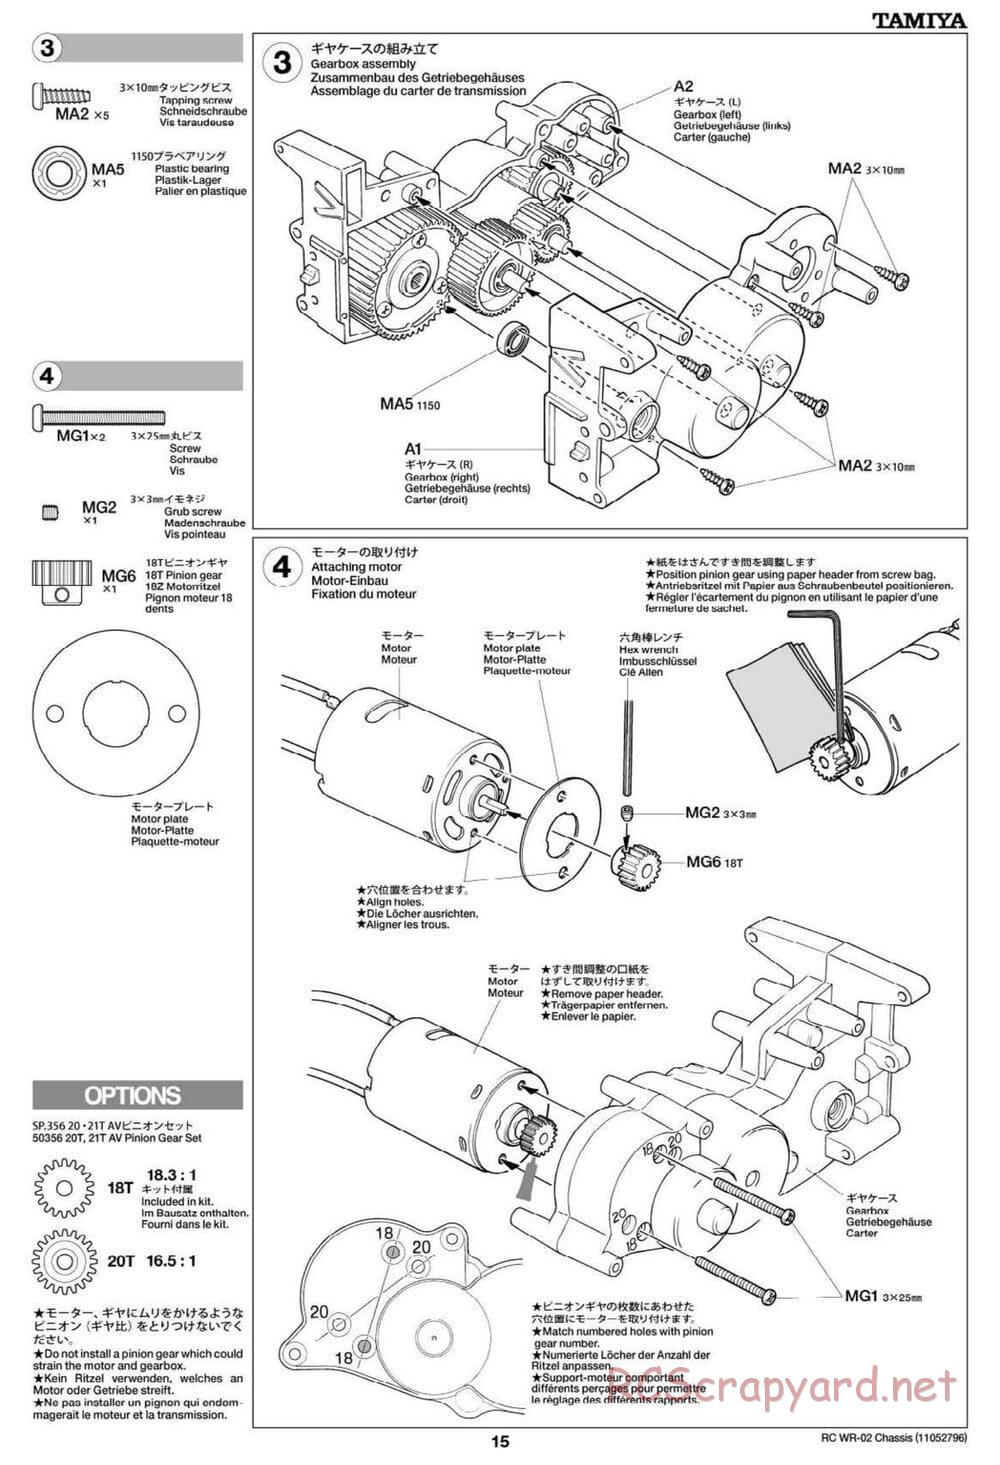 Tamiya - Suzuki Jimny (SJ30) Wheelie - WR-02 Chassis - Manual - Page 15